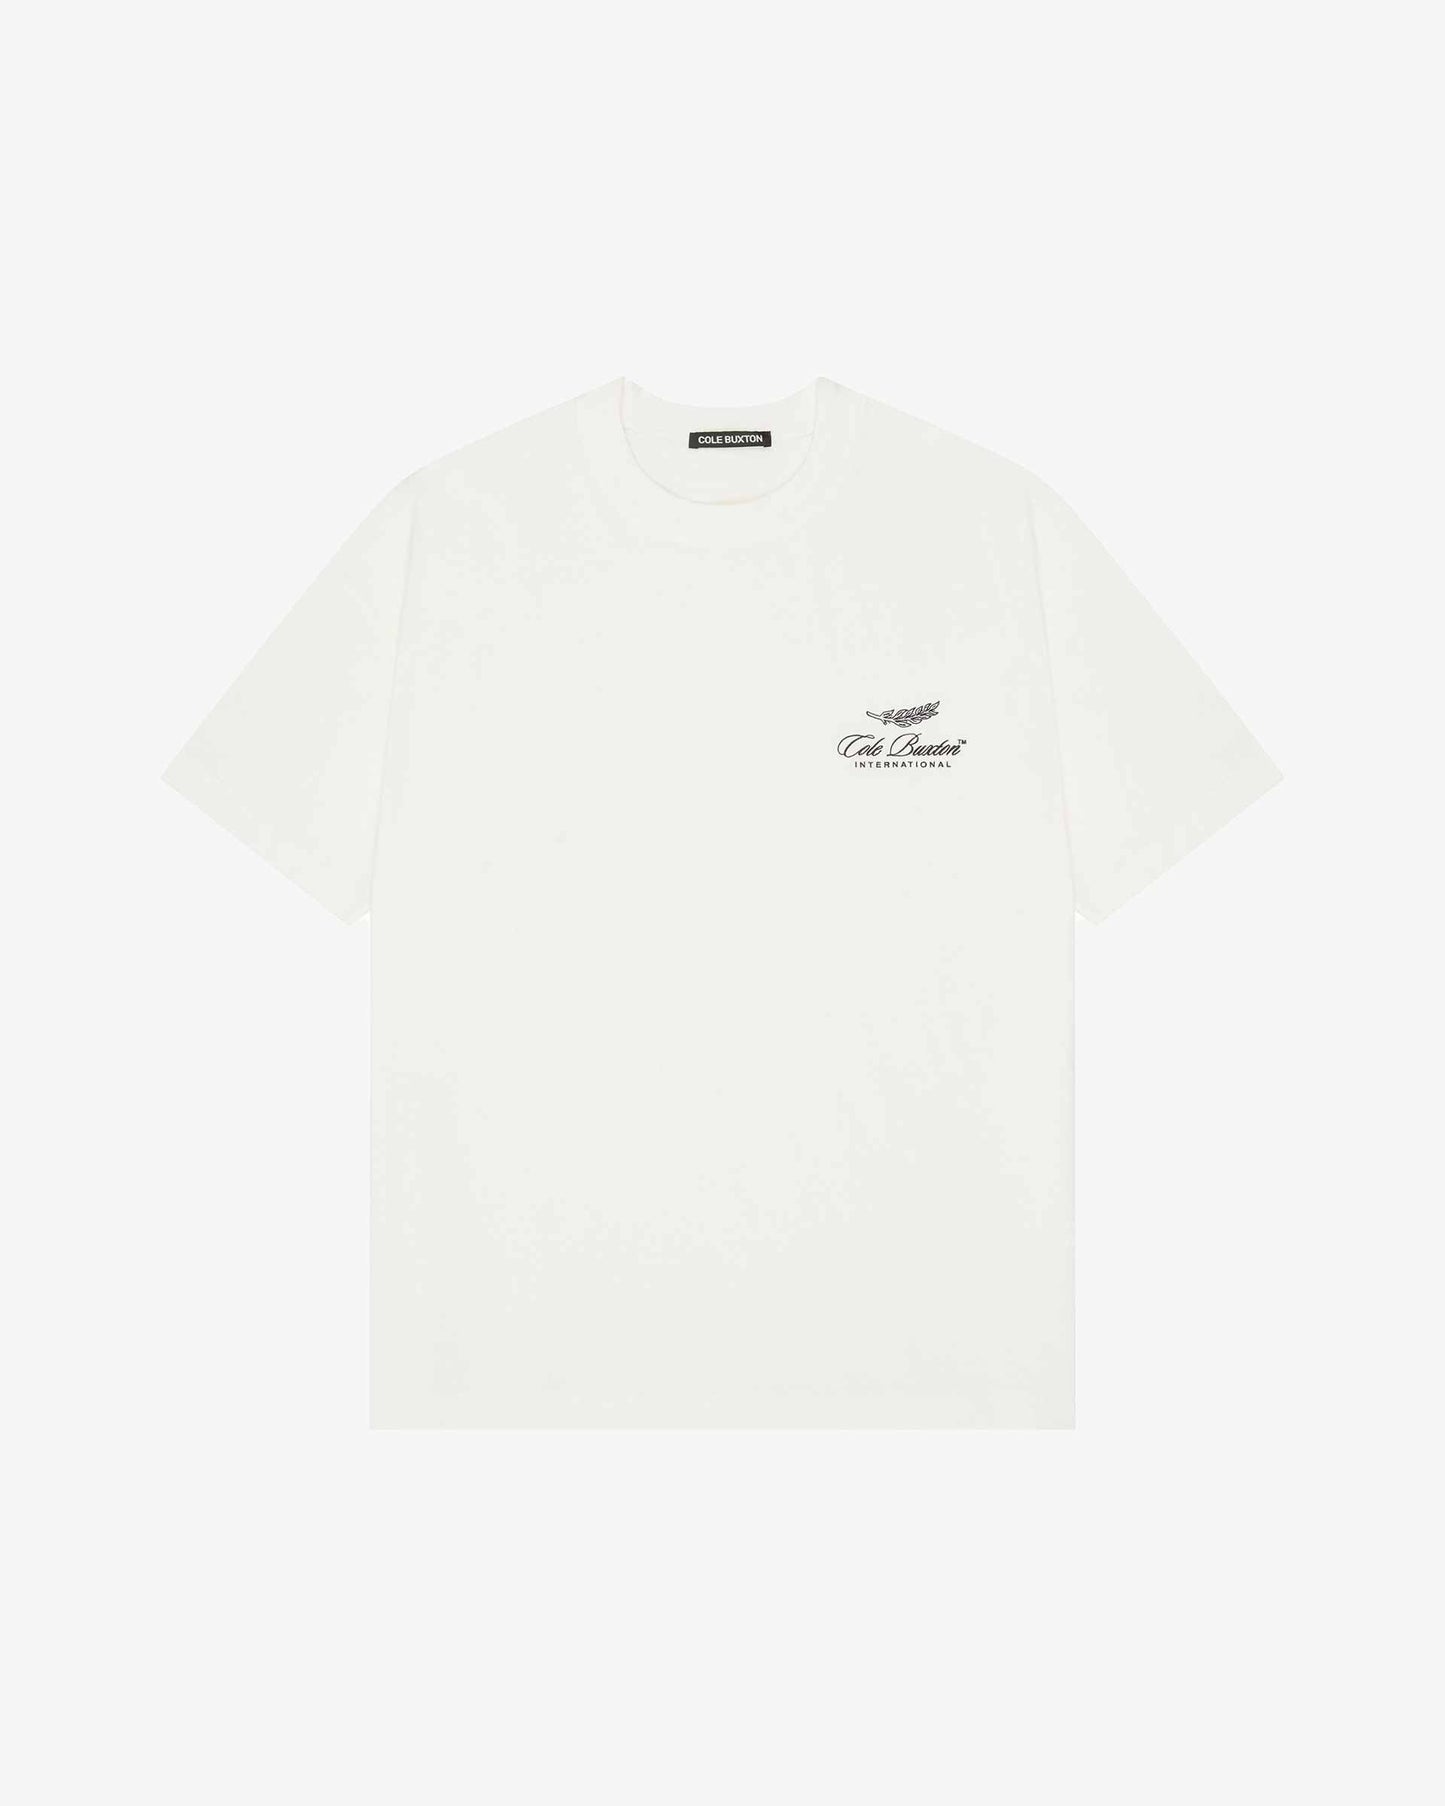 Cole Buxton | International T-Shirt | Mens | Cotton | Vintage White